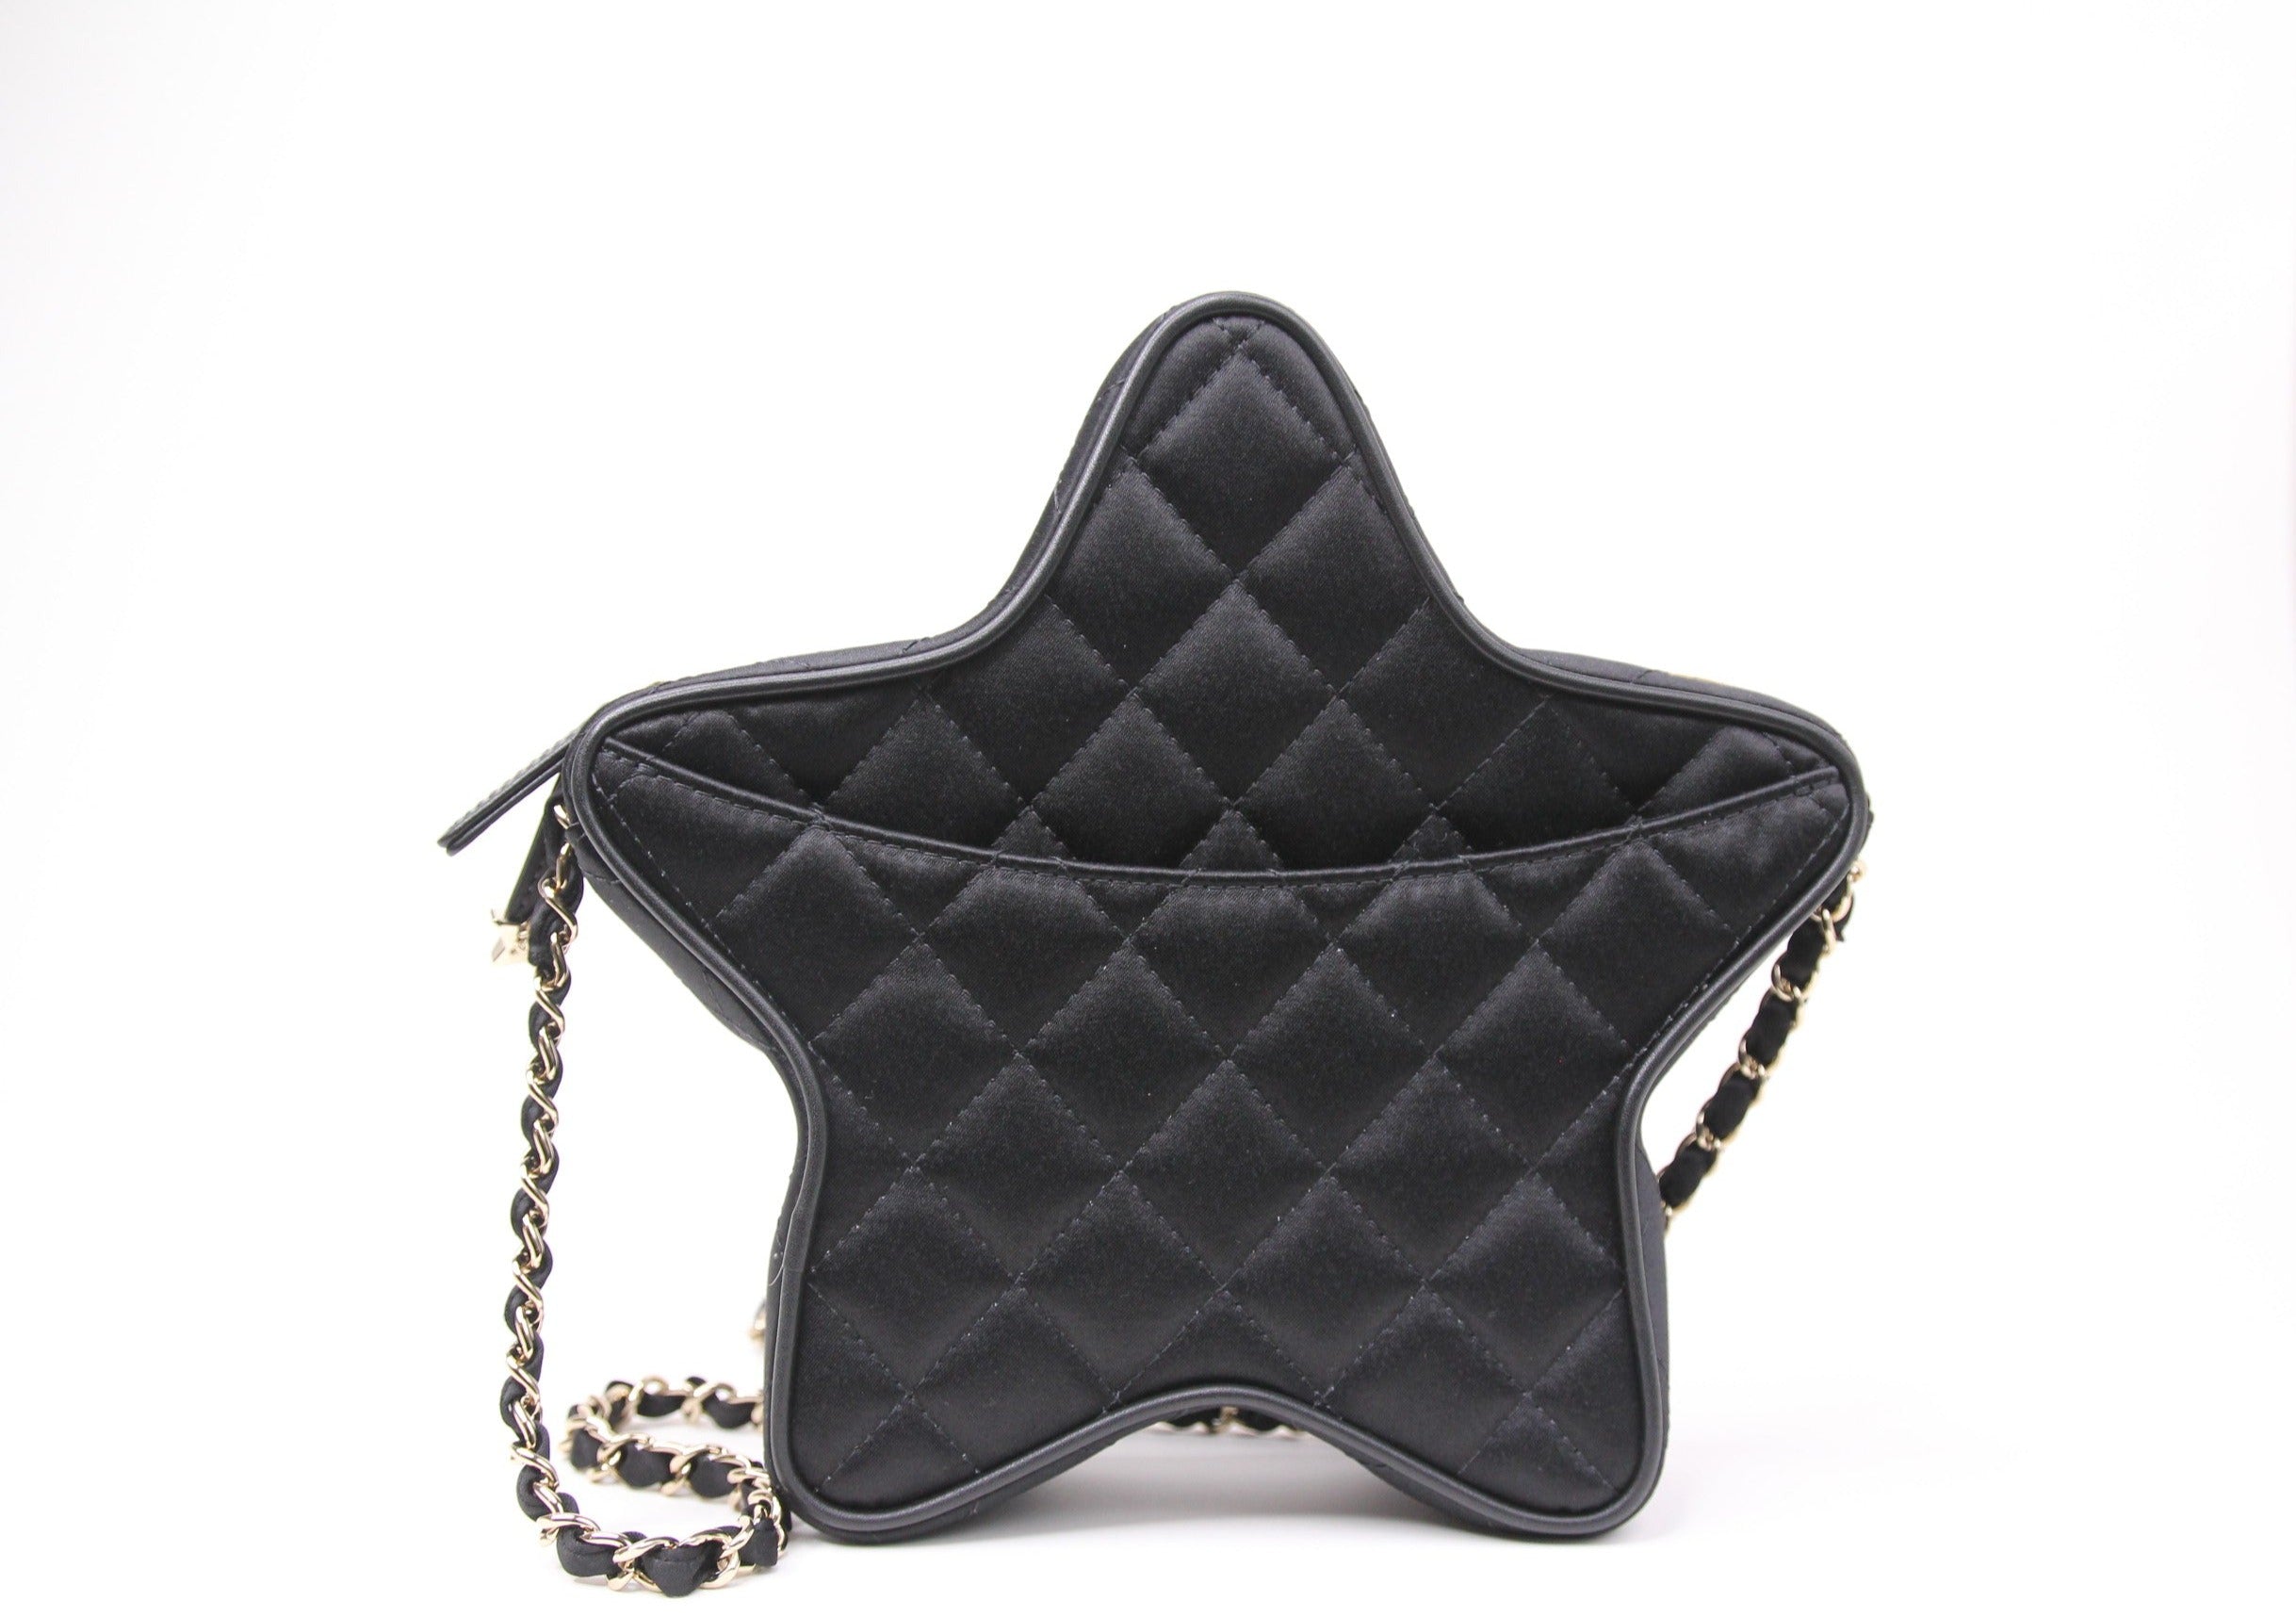 Back of Chanel star handbag in finished in black satin